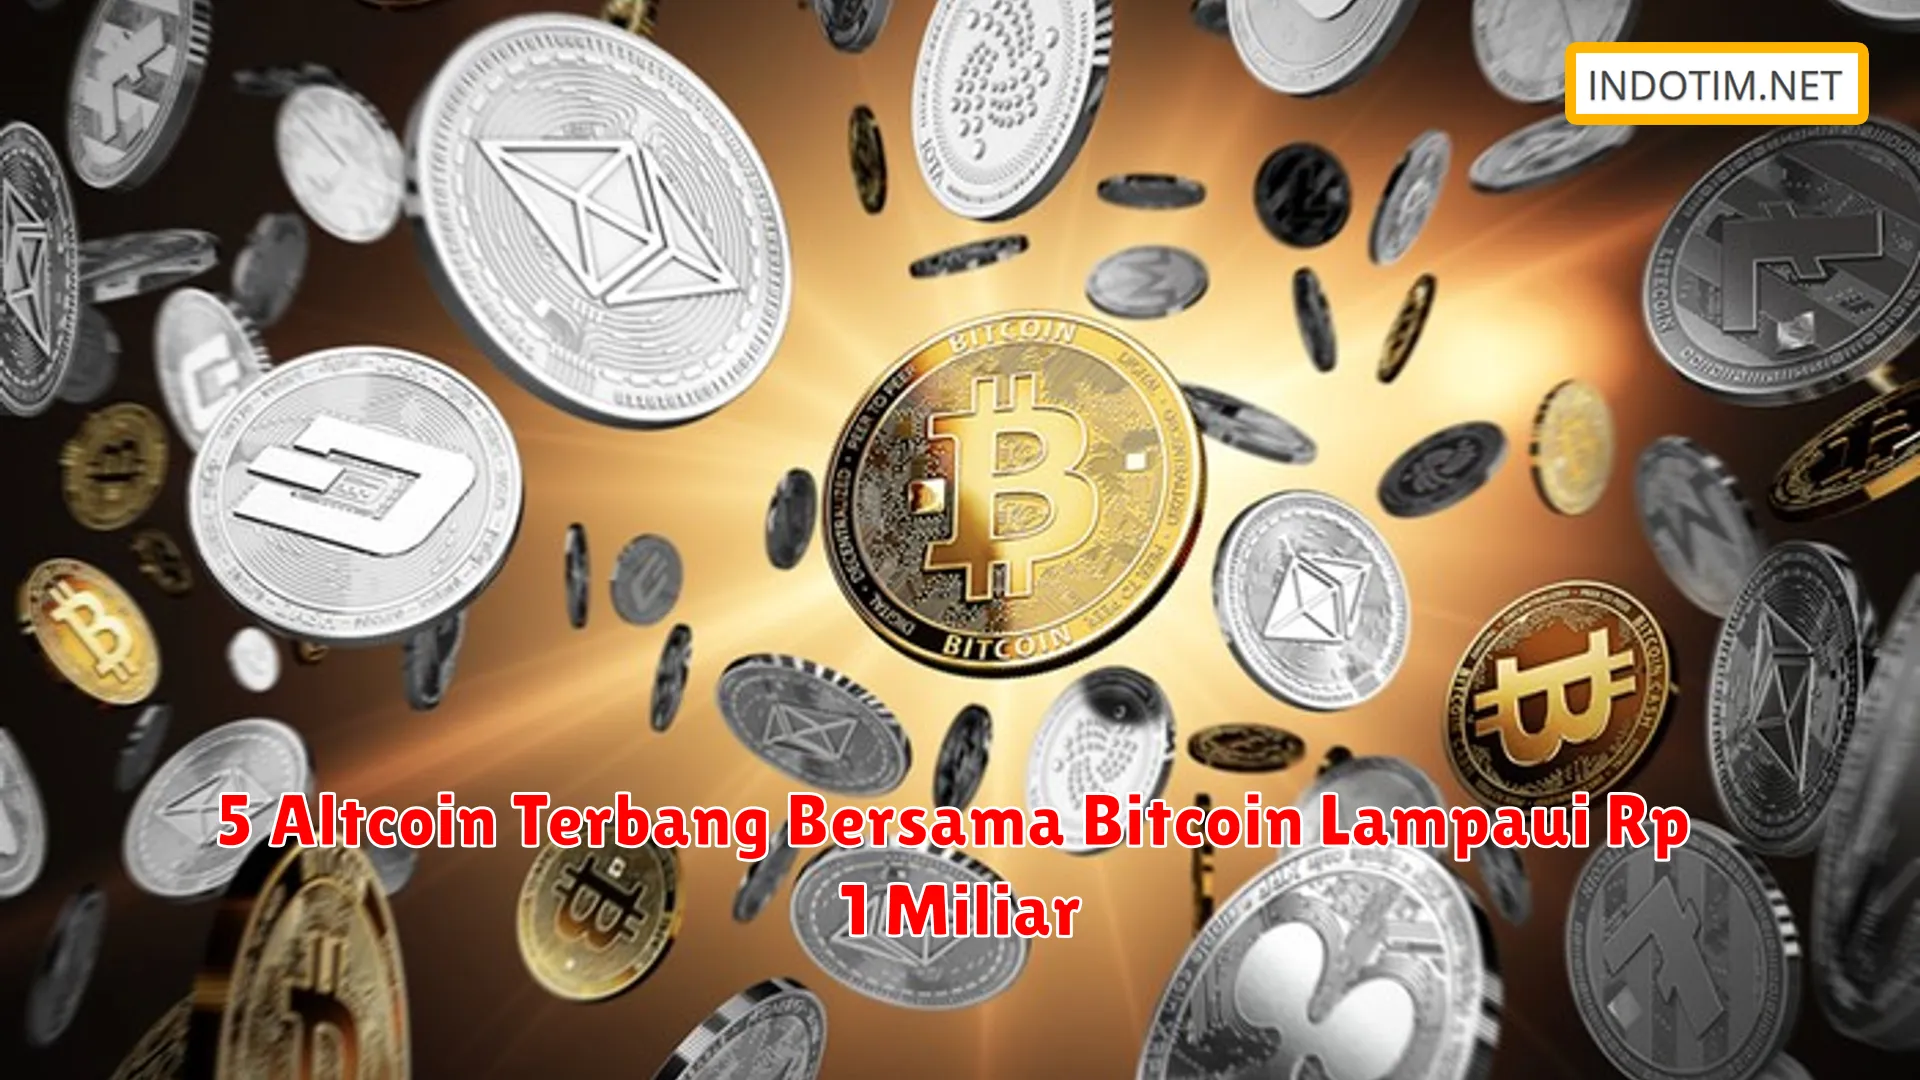 5 Altcoin Terbang Bersama Bitcoin Lampaui Rp 1 Miliar